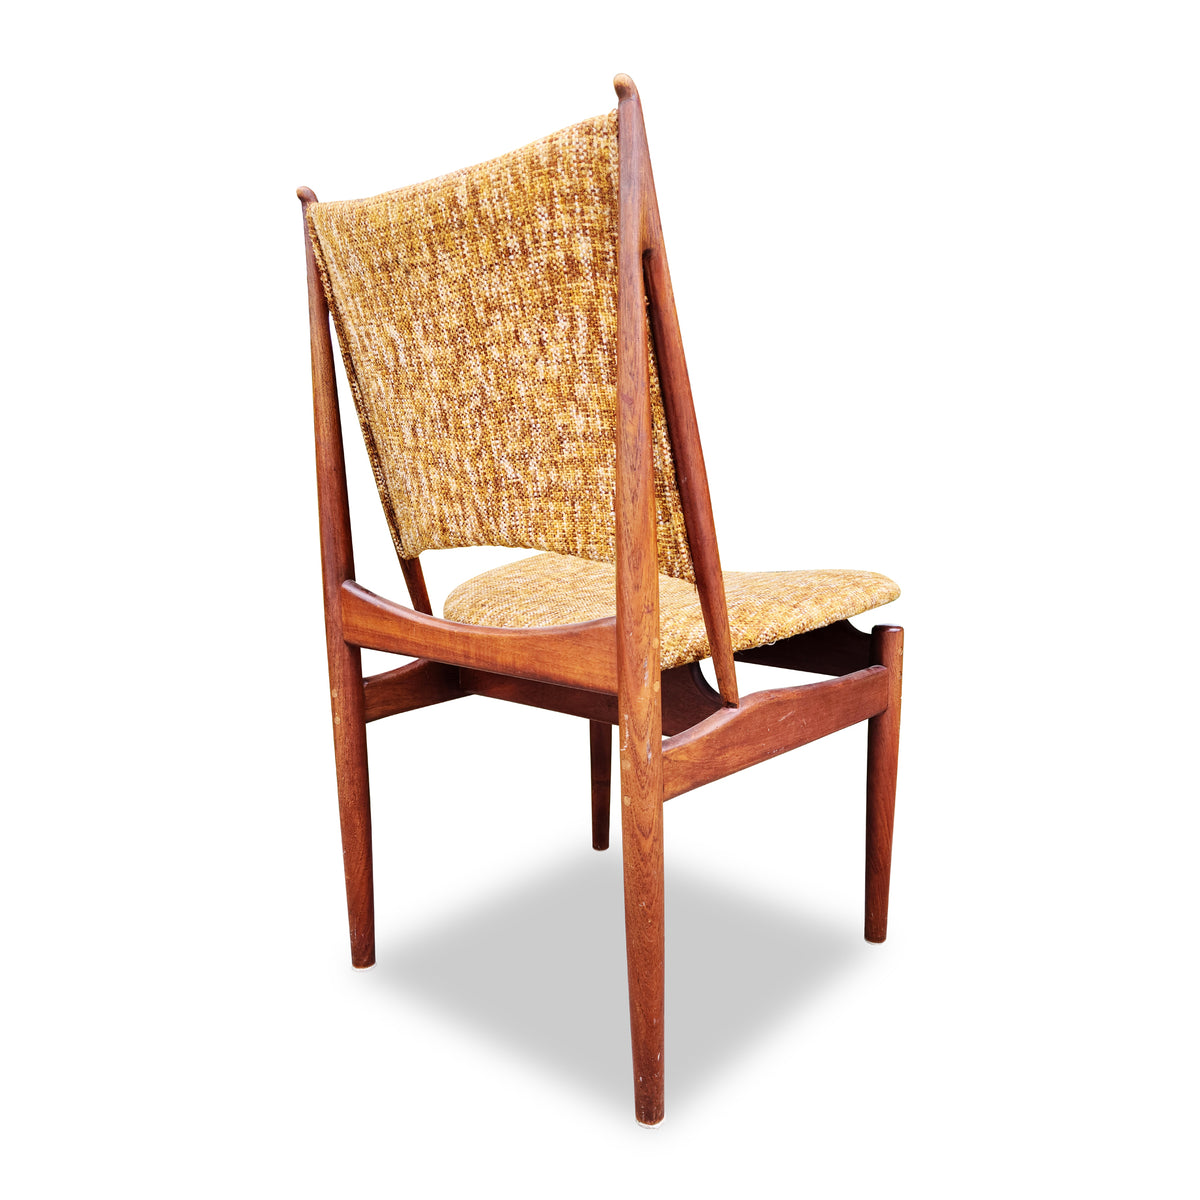 Finn Juhl &quot;Egyptian Chairs&quot;